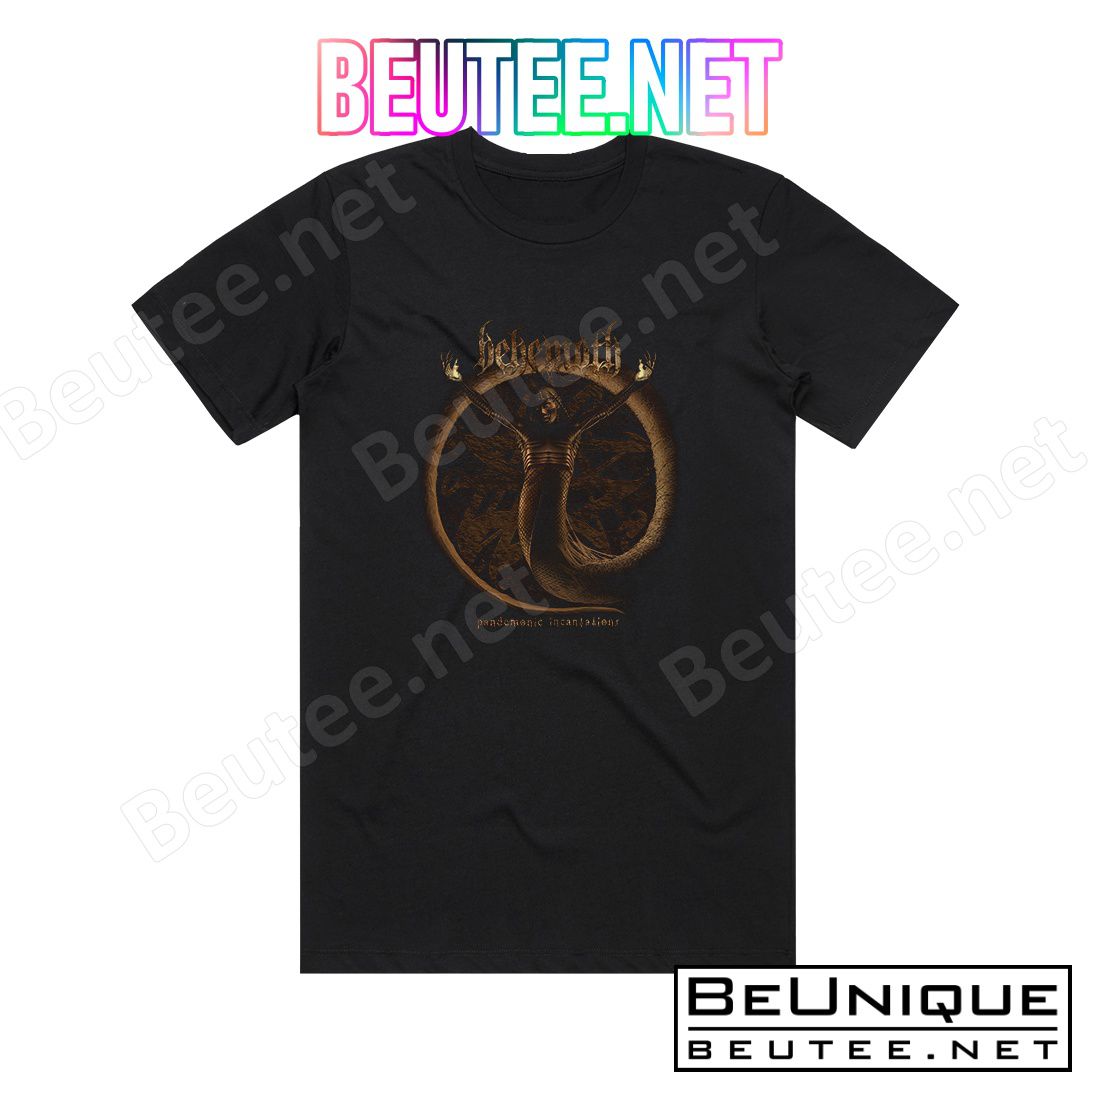 Behemoth Pandemonic Incantations 1 Album Cover T-Shirt